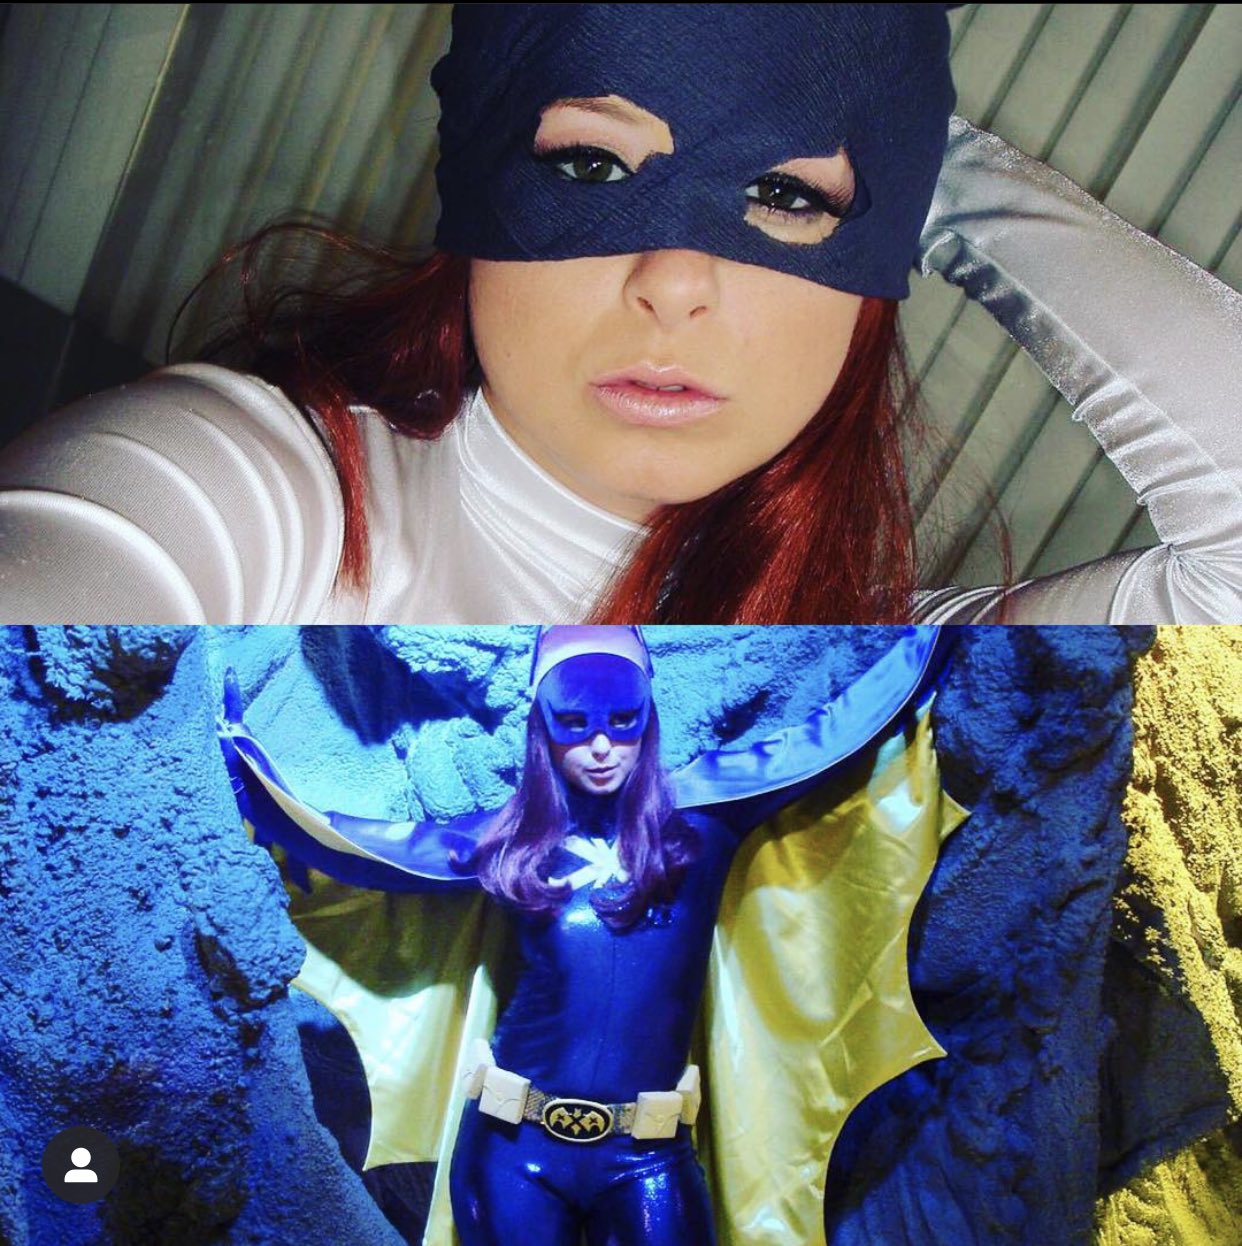 TW Pornstars - 3 pic. Sunny Lane. Twitter. #TBThursday #SMASH When I had  the honor to play #Batgirl. 7:14 PM - 28 Jan 2021